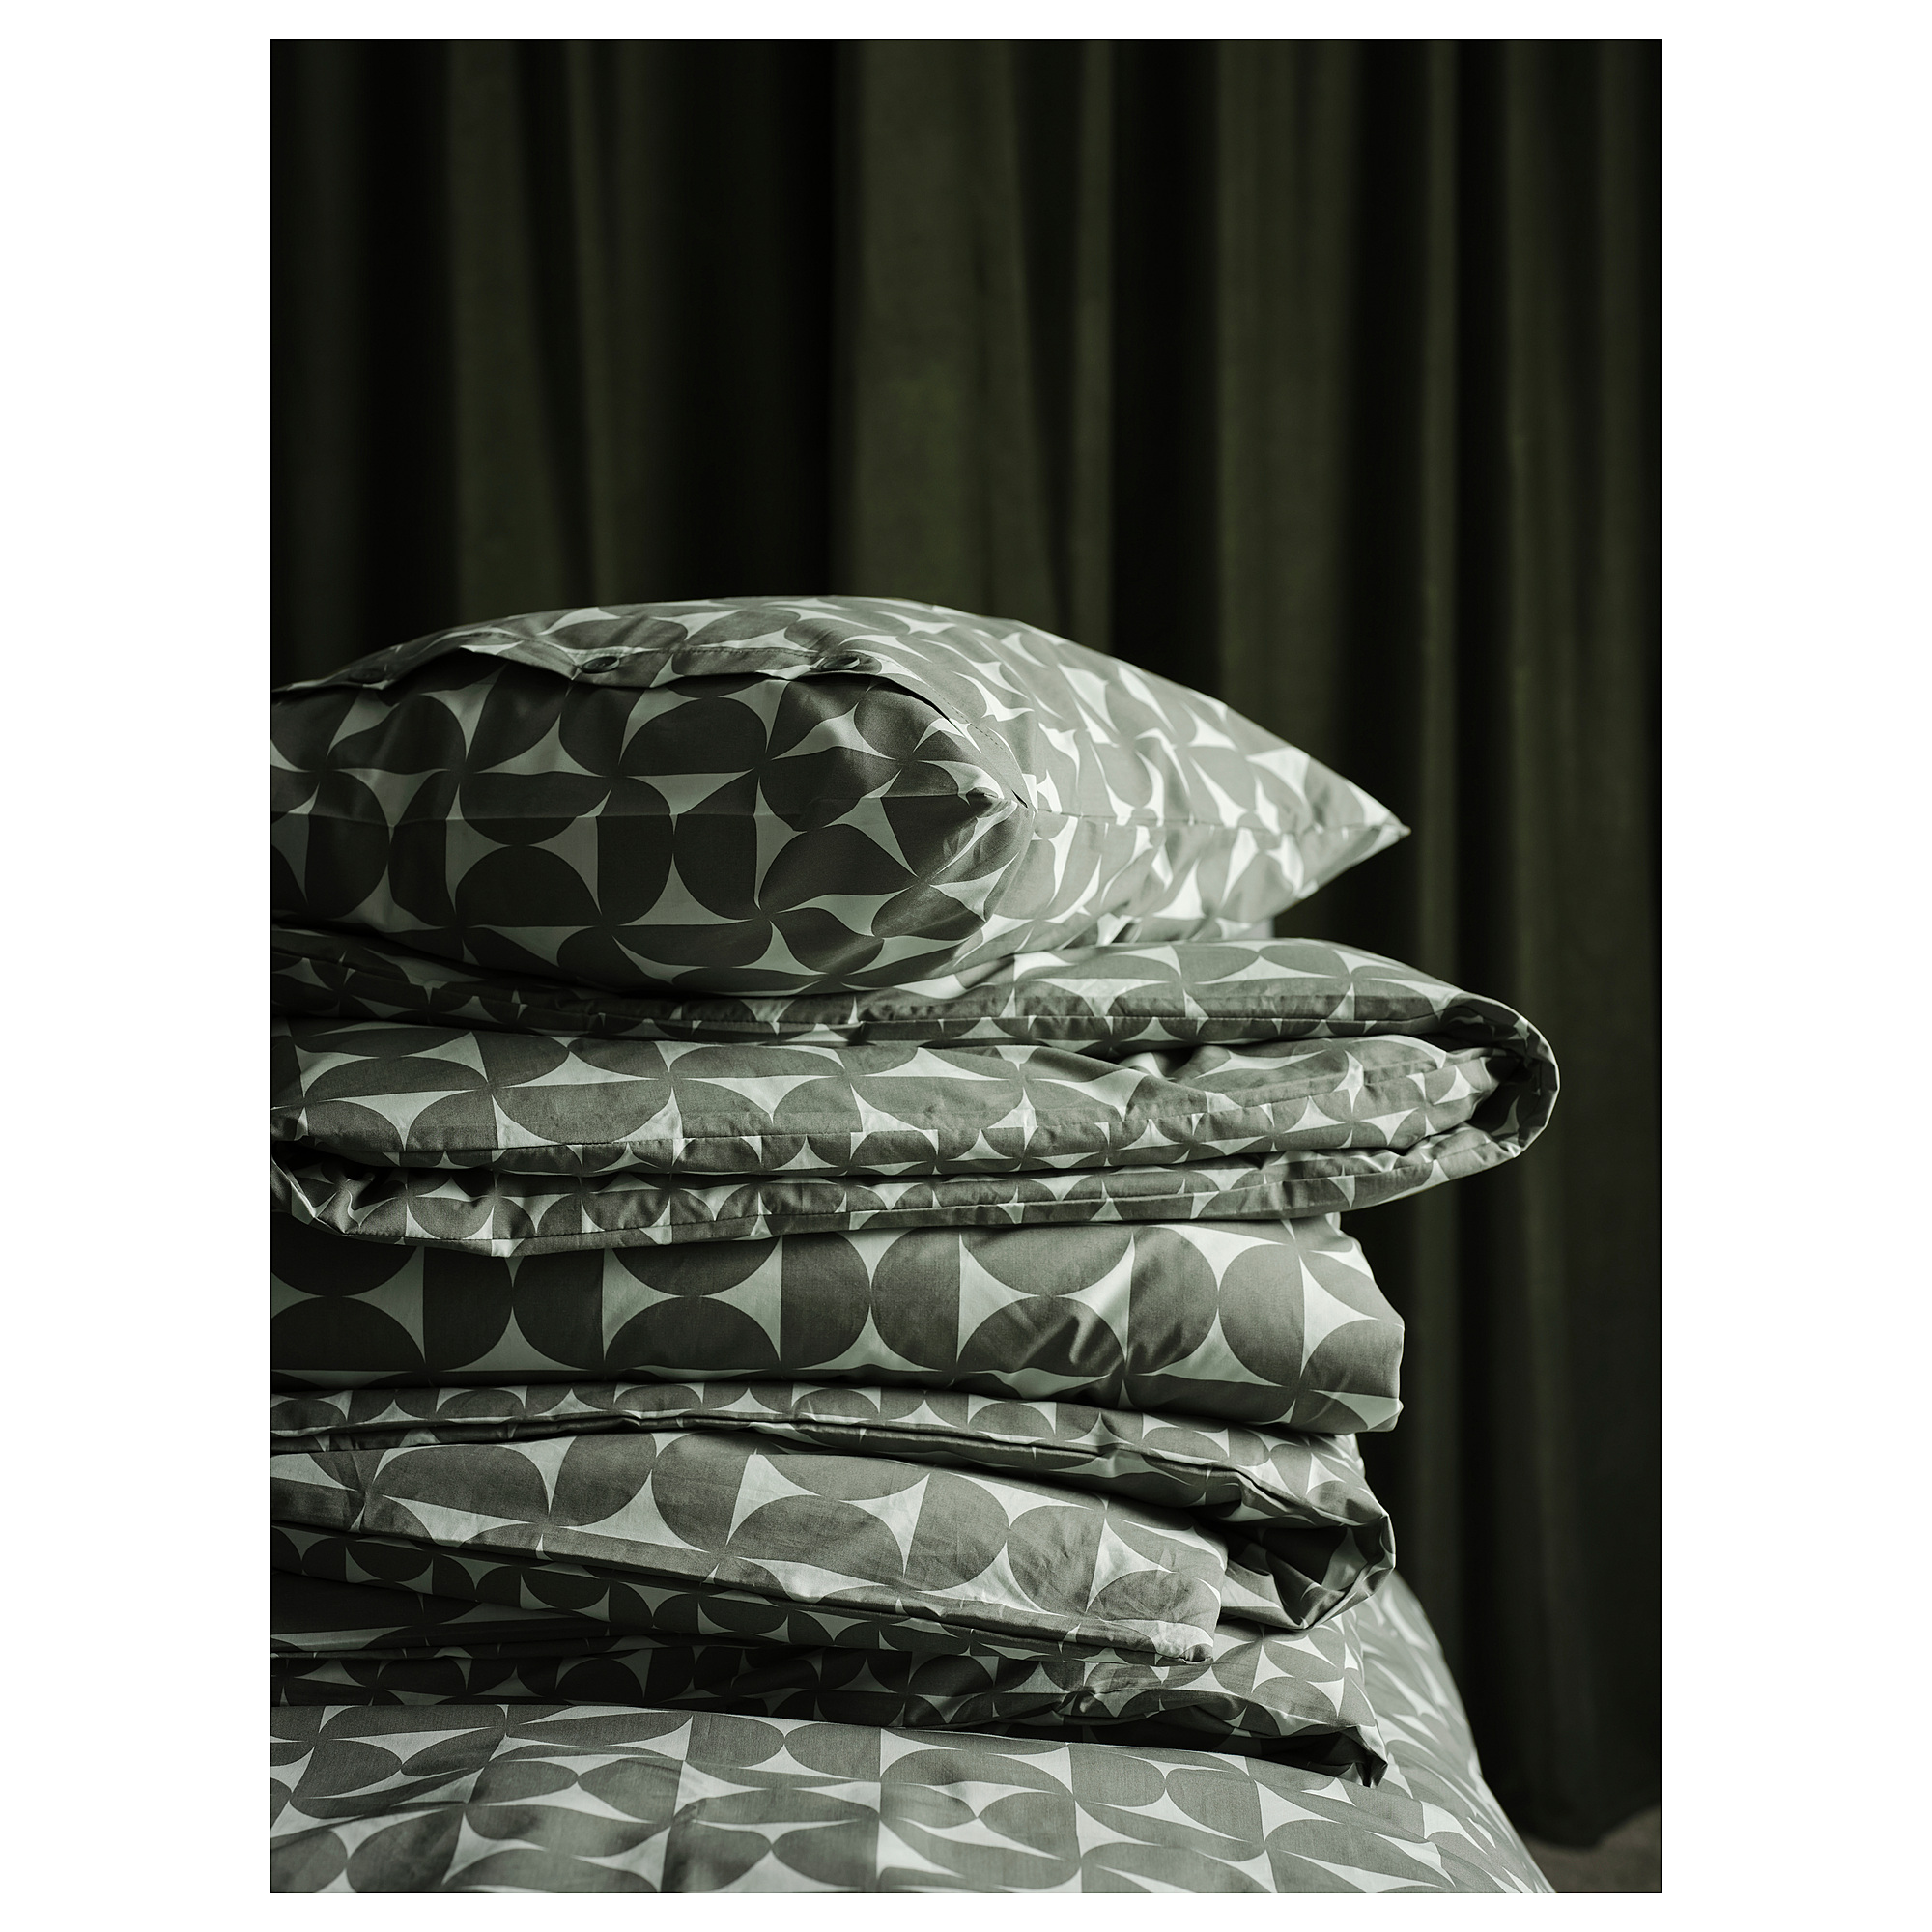 ÄNGSNEJLIKA duvet cover and 2 pillowcases